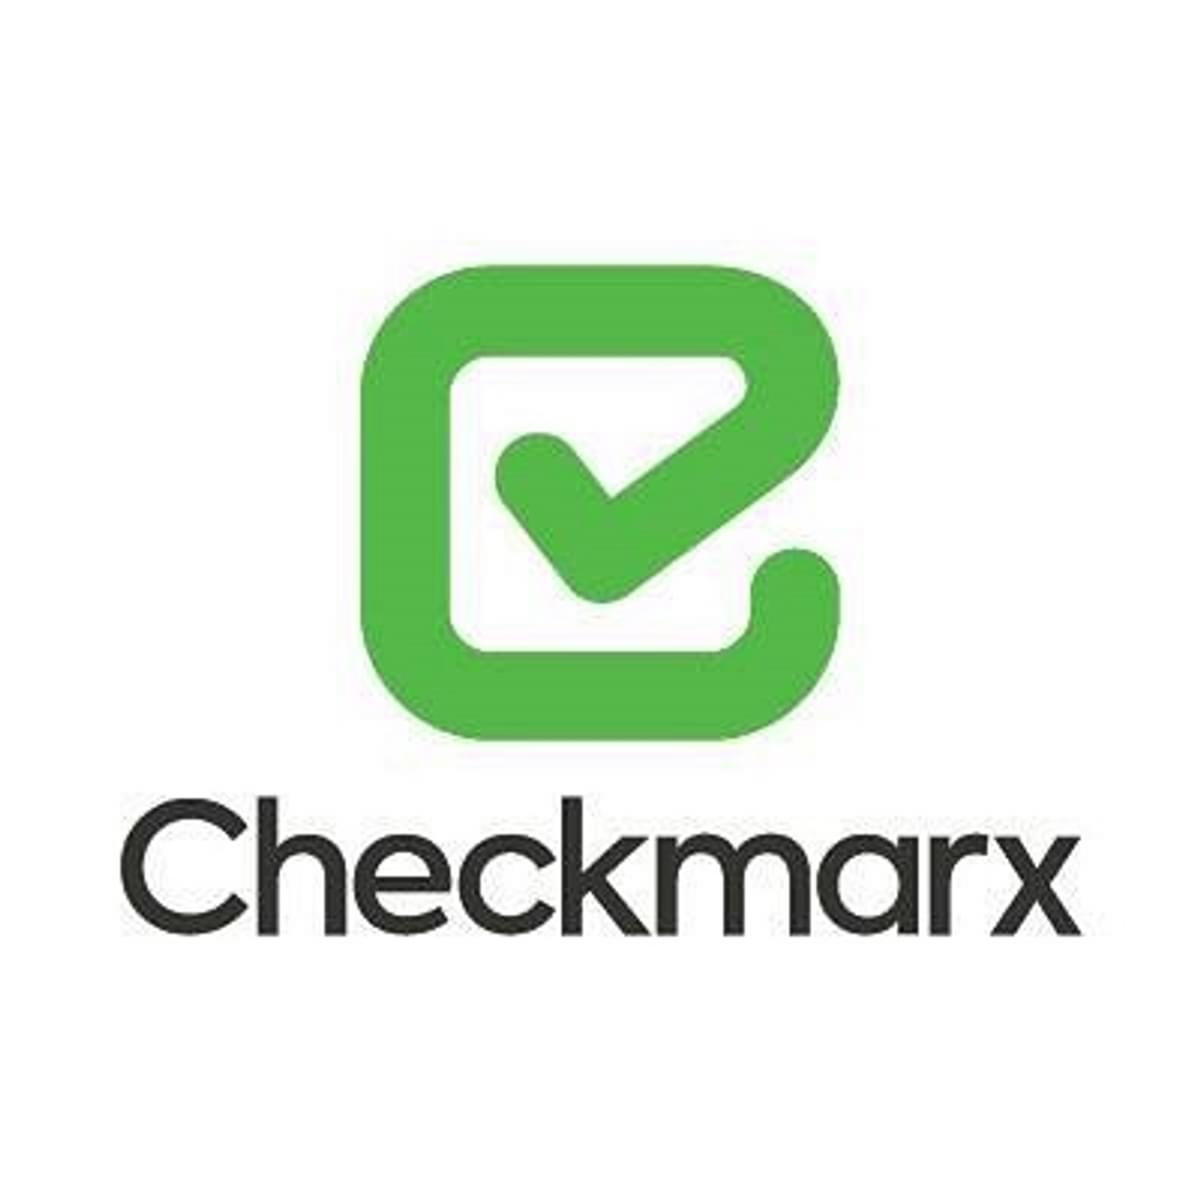 Hellman & Friedman koopt cybersecurity specialist Checkmarx image